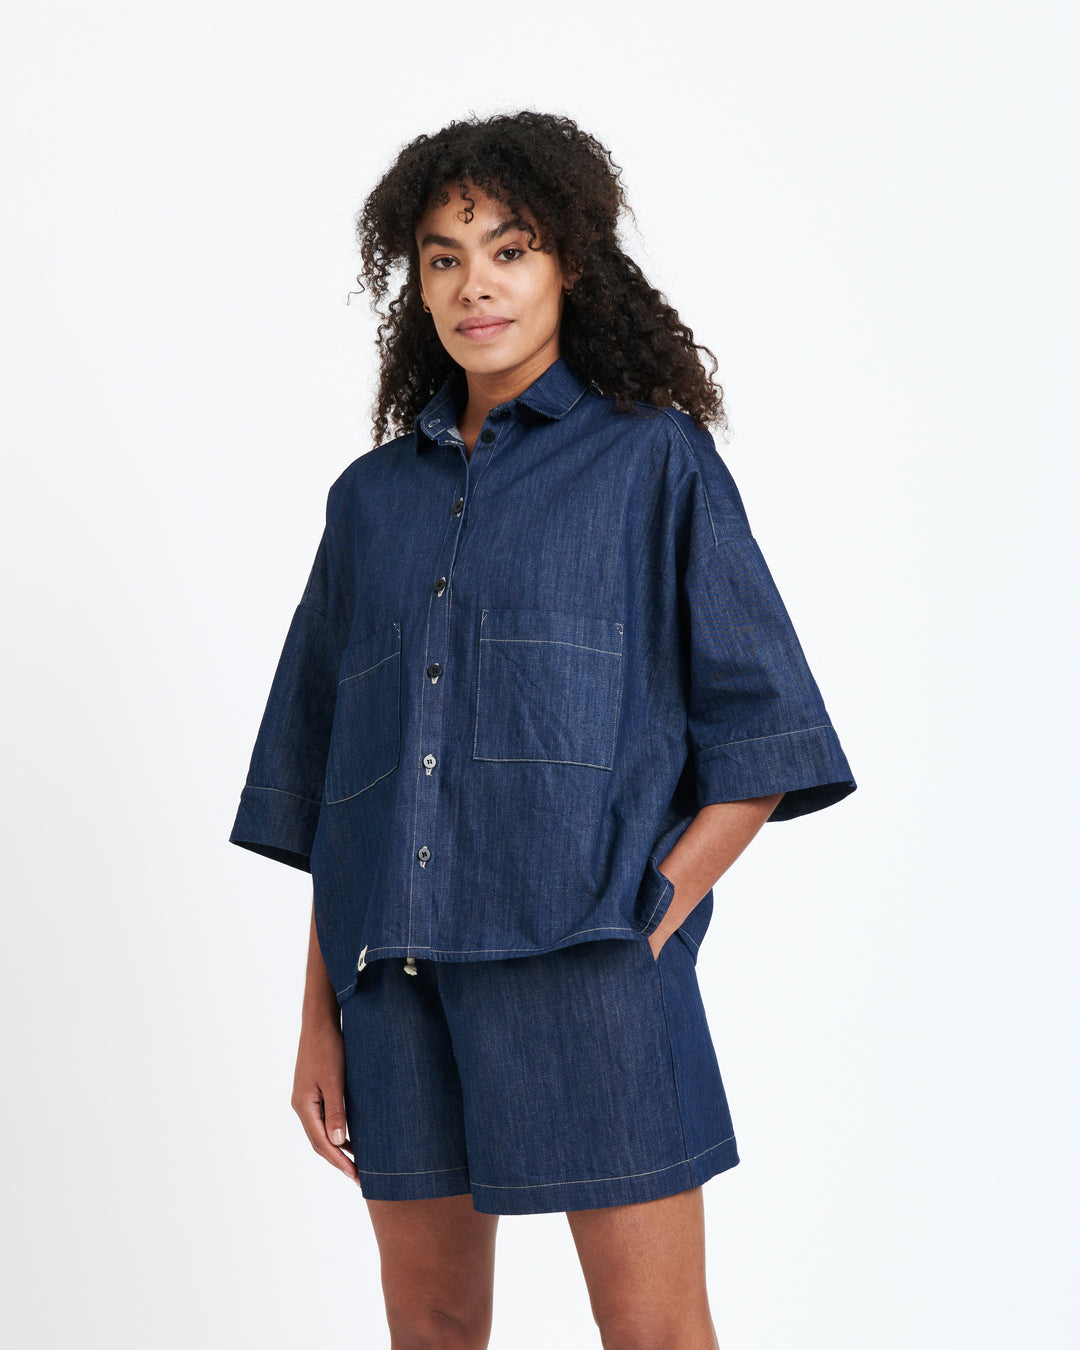 New Optimist womenswear Notte | Mid-sleeve boxy blouse Blouse